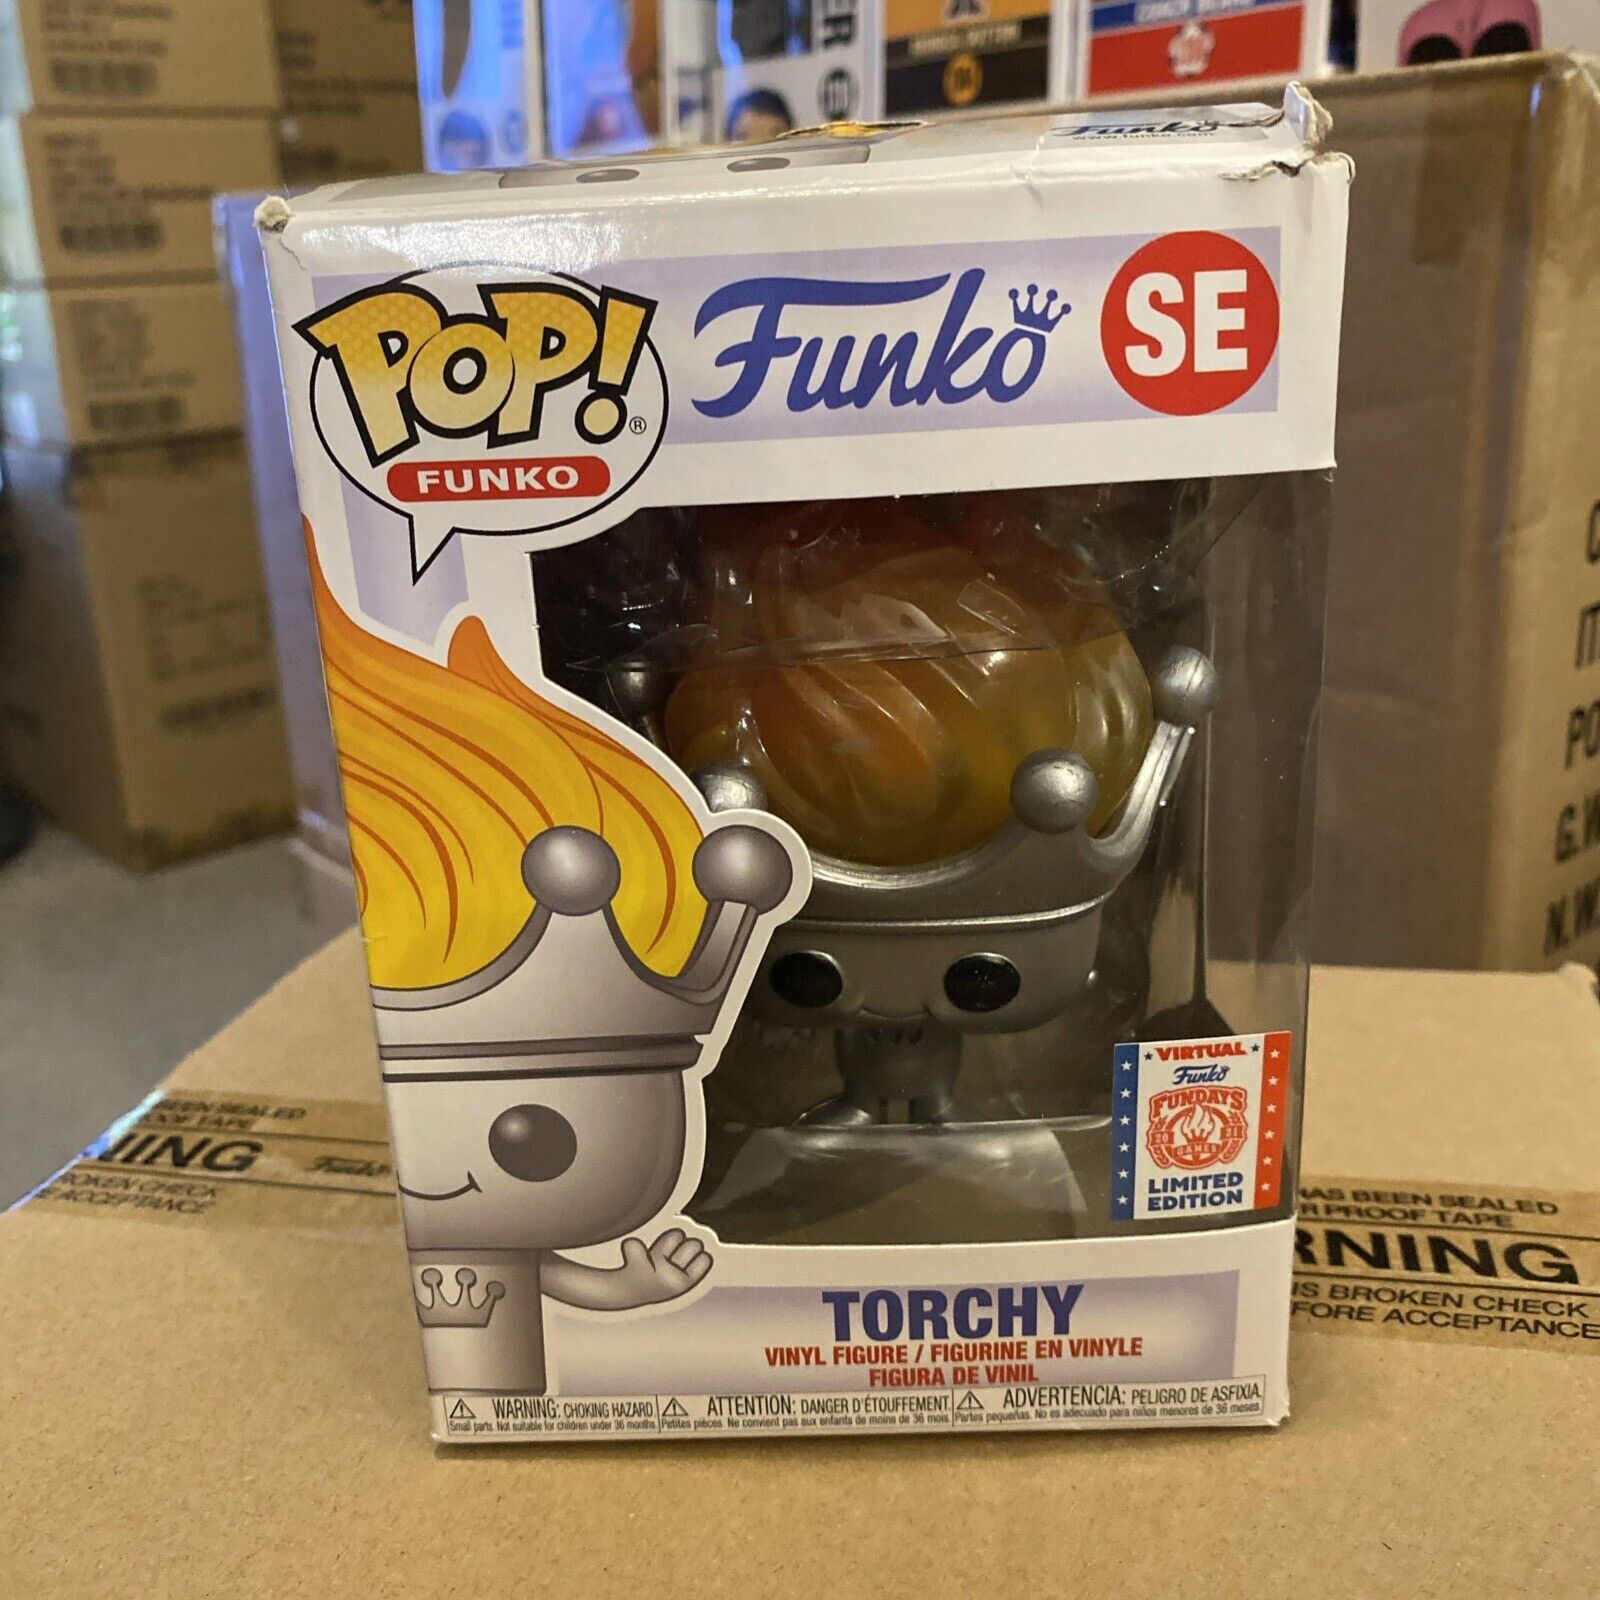 Funko Pop Torchy SE Virtual Fundays Games Limited Edition Box Damage See Pics